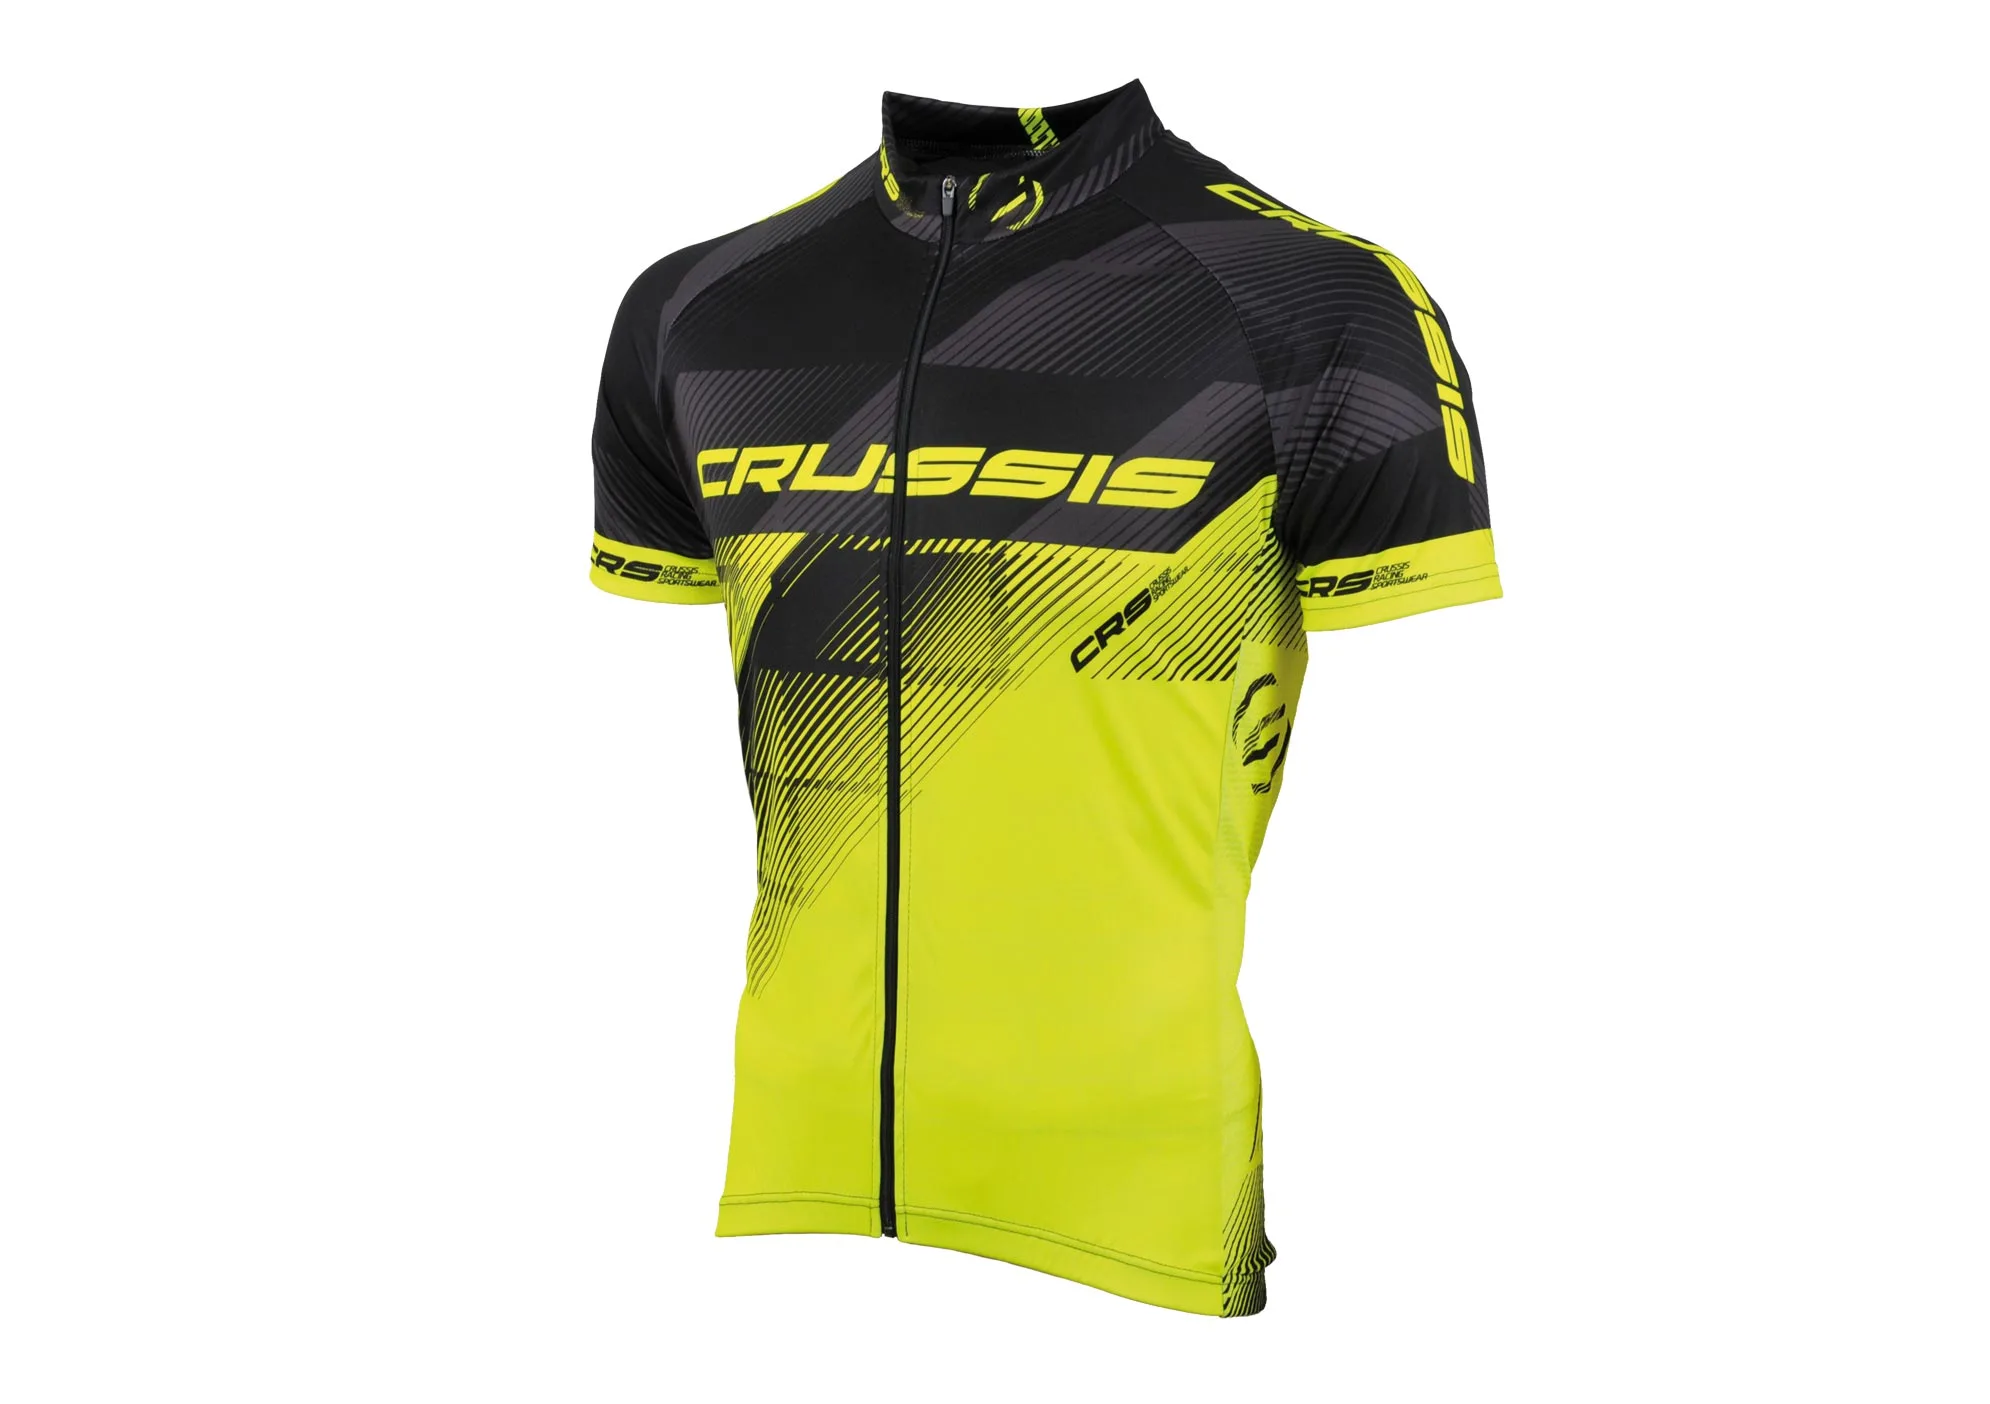 Cyklistický dres Crussis - černá / žlutá fluo